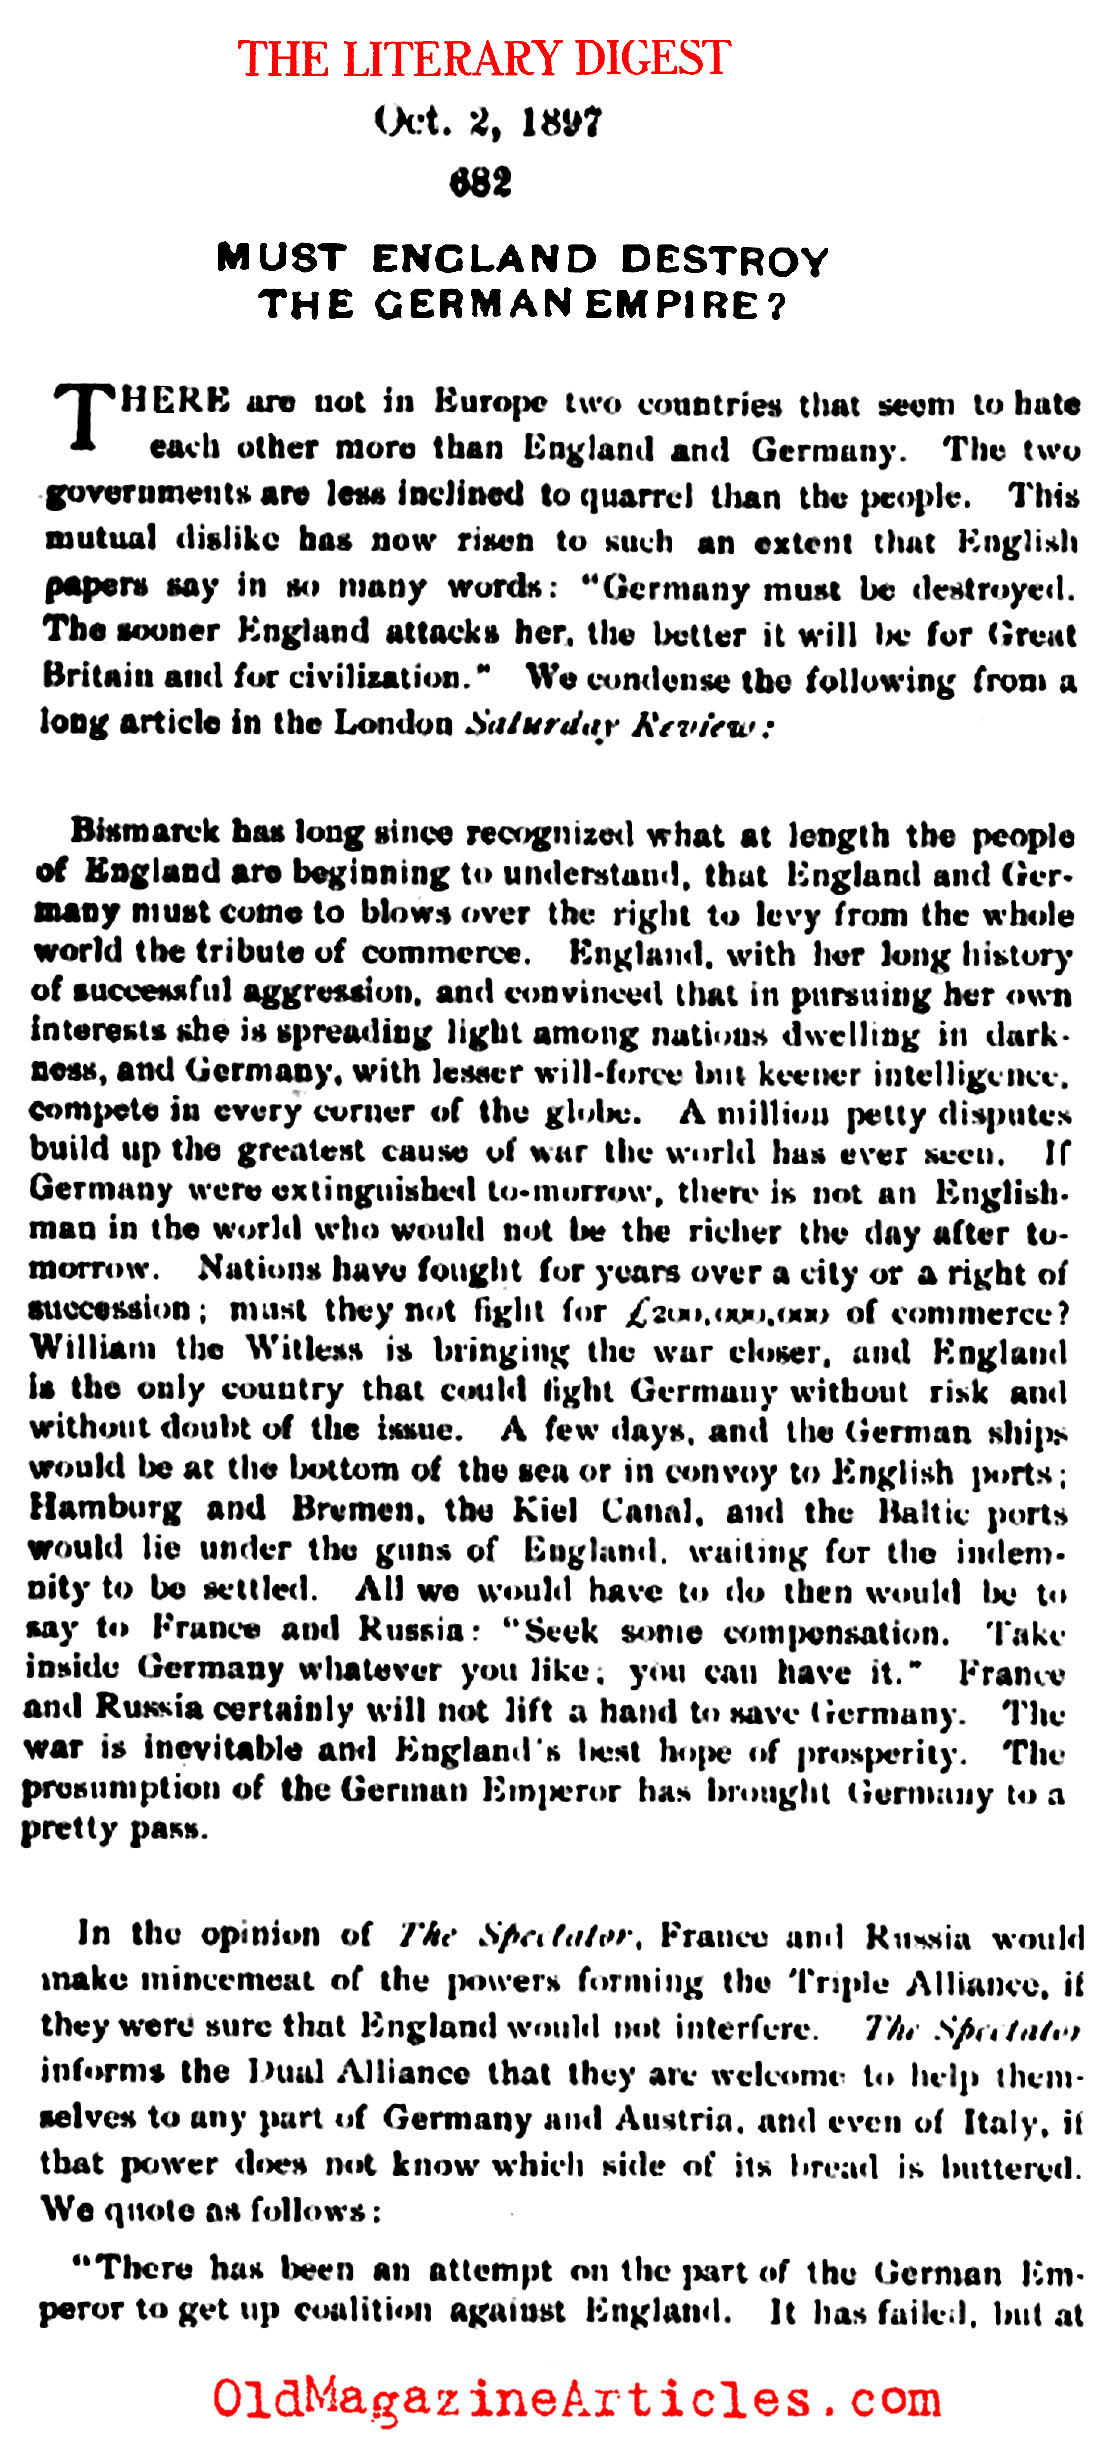 Must England Destroy Germany? (Literary Digest, 1897)